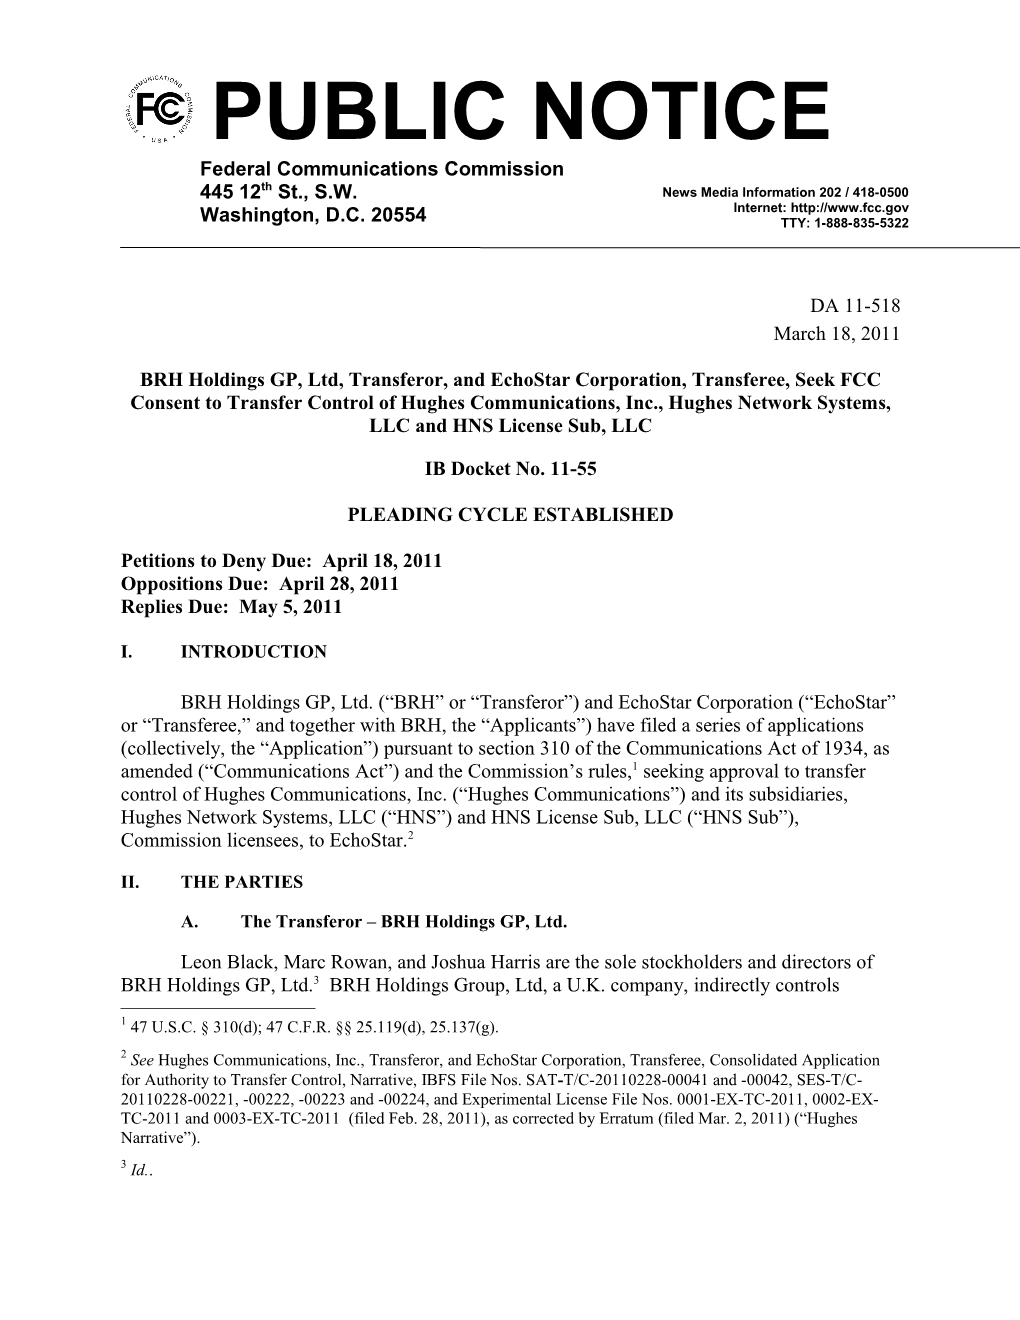 BRH Holdings GP, Ltd, Transferor, and Echostar Corporation, Transferee, Seek FCC Consent